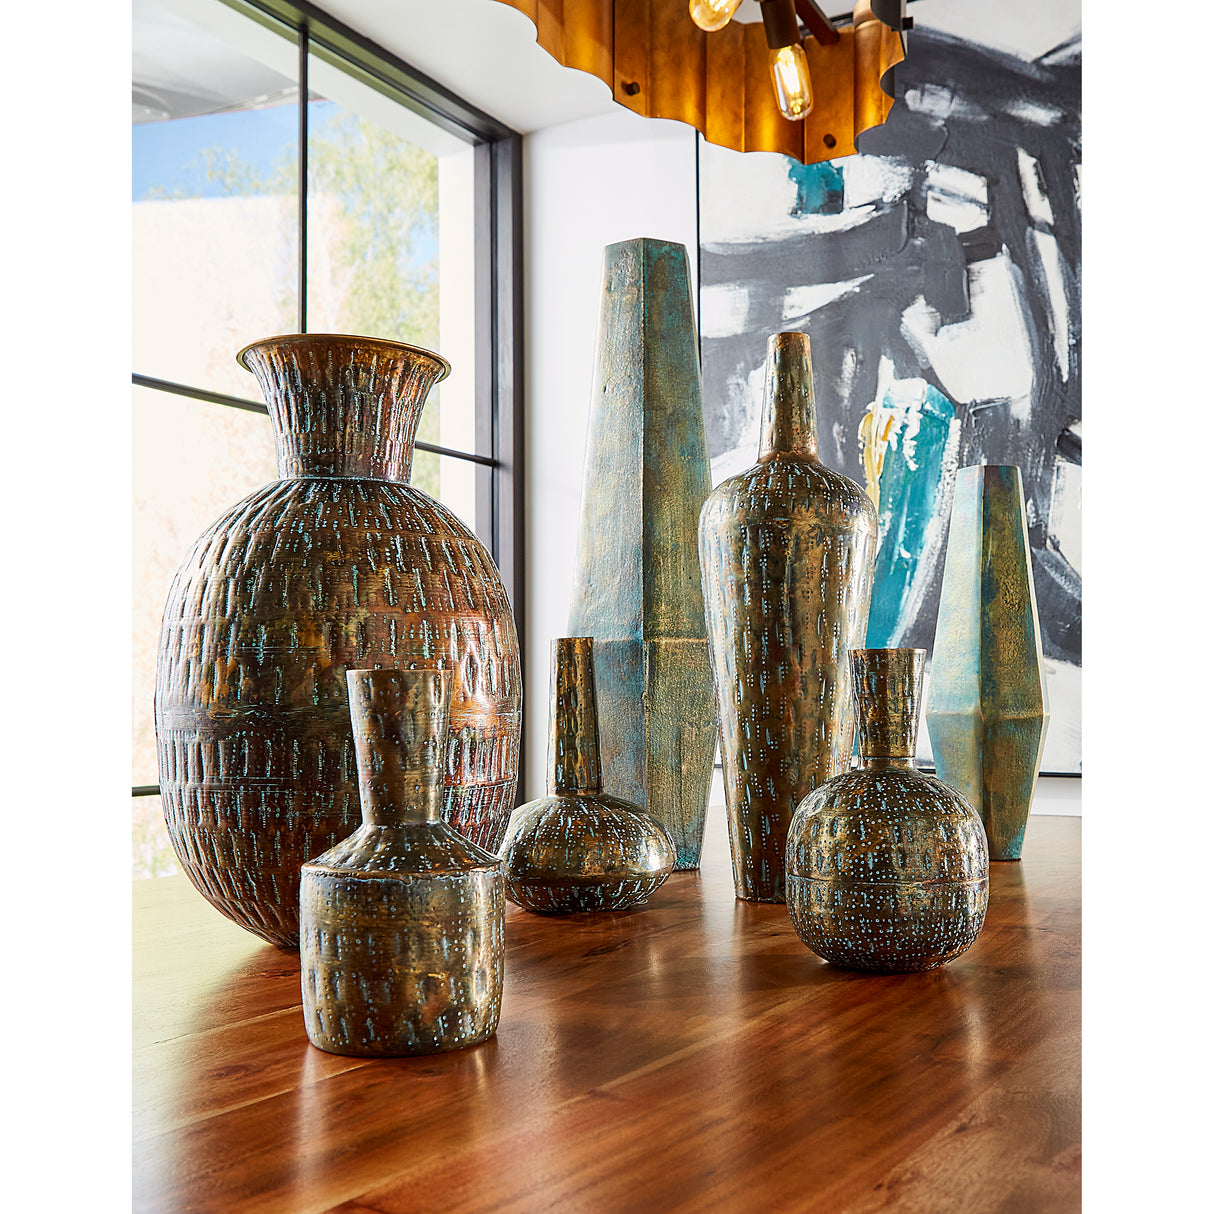 Elk S0807-9778 Fowler Vase - Large Patinated Brass